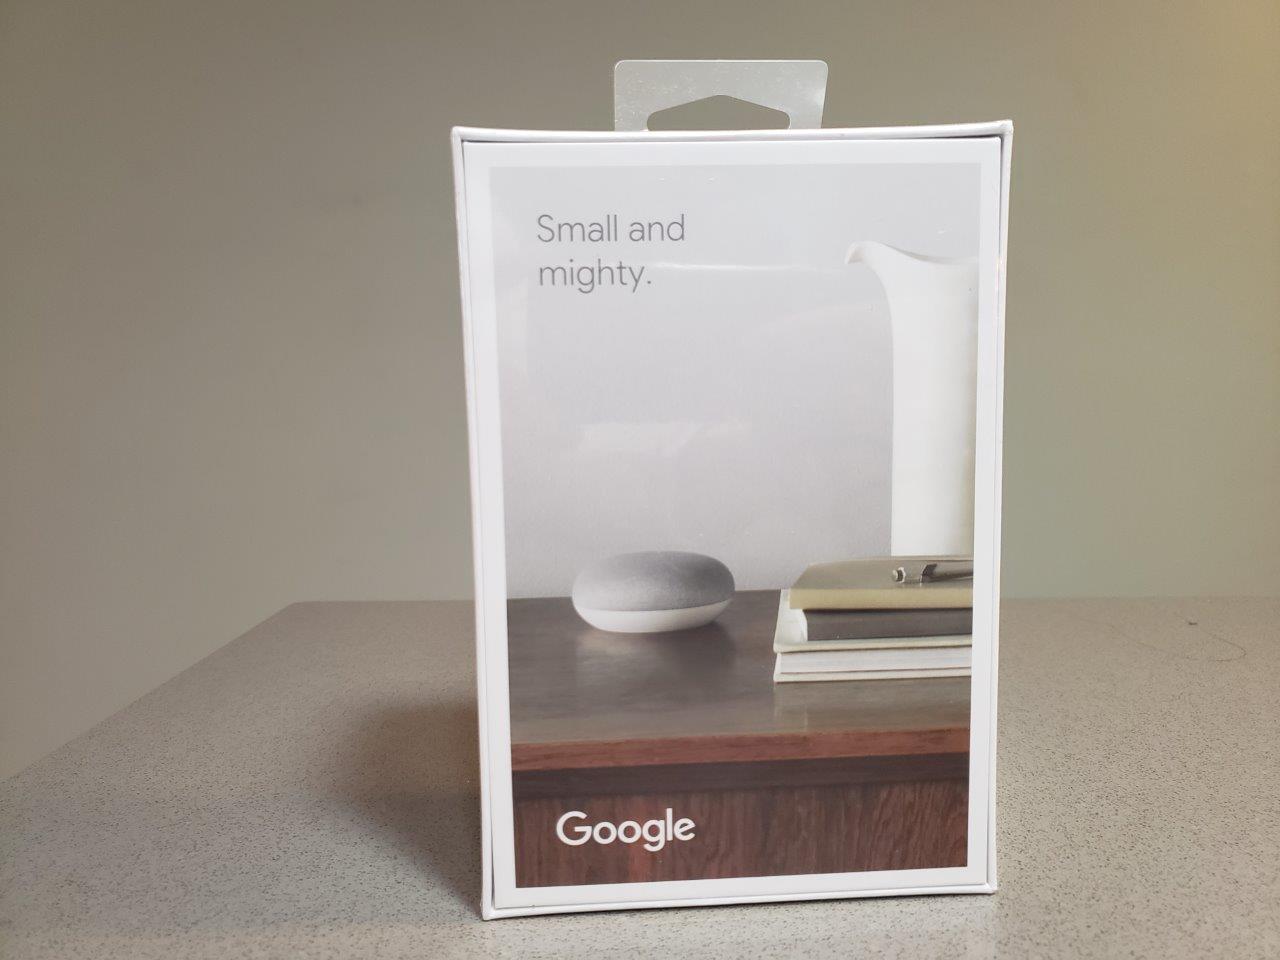 Google Nest Mini (2nd Generation) with Google Assistant (Chalk) 2019 VERSION - BRAND NEW!!!